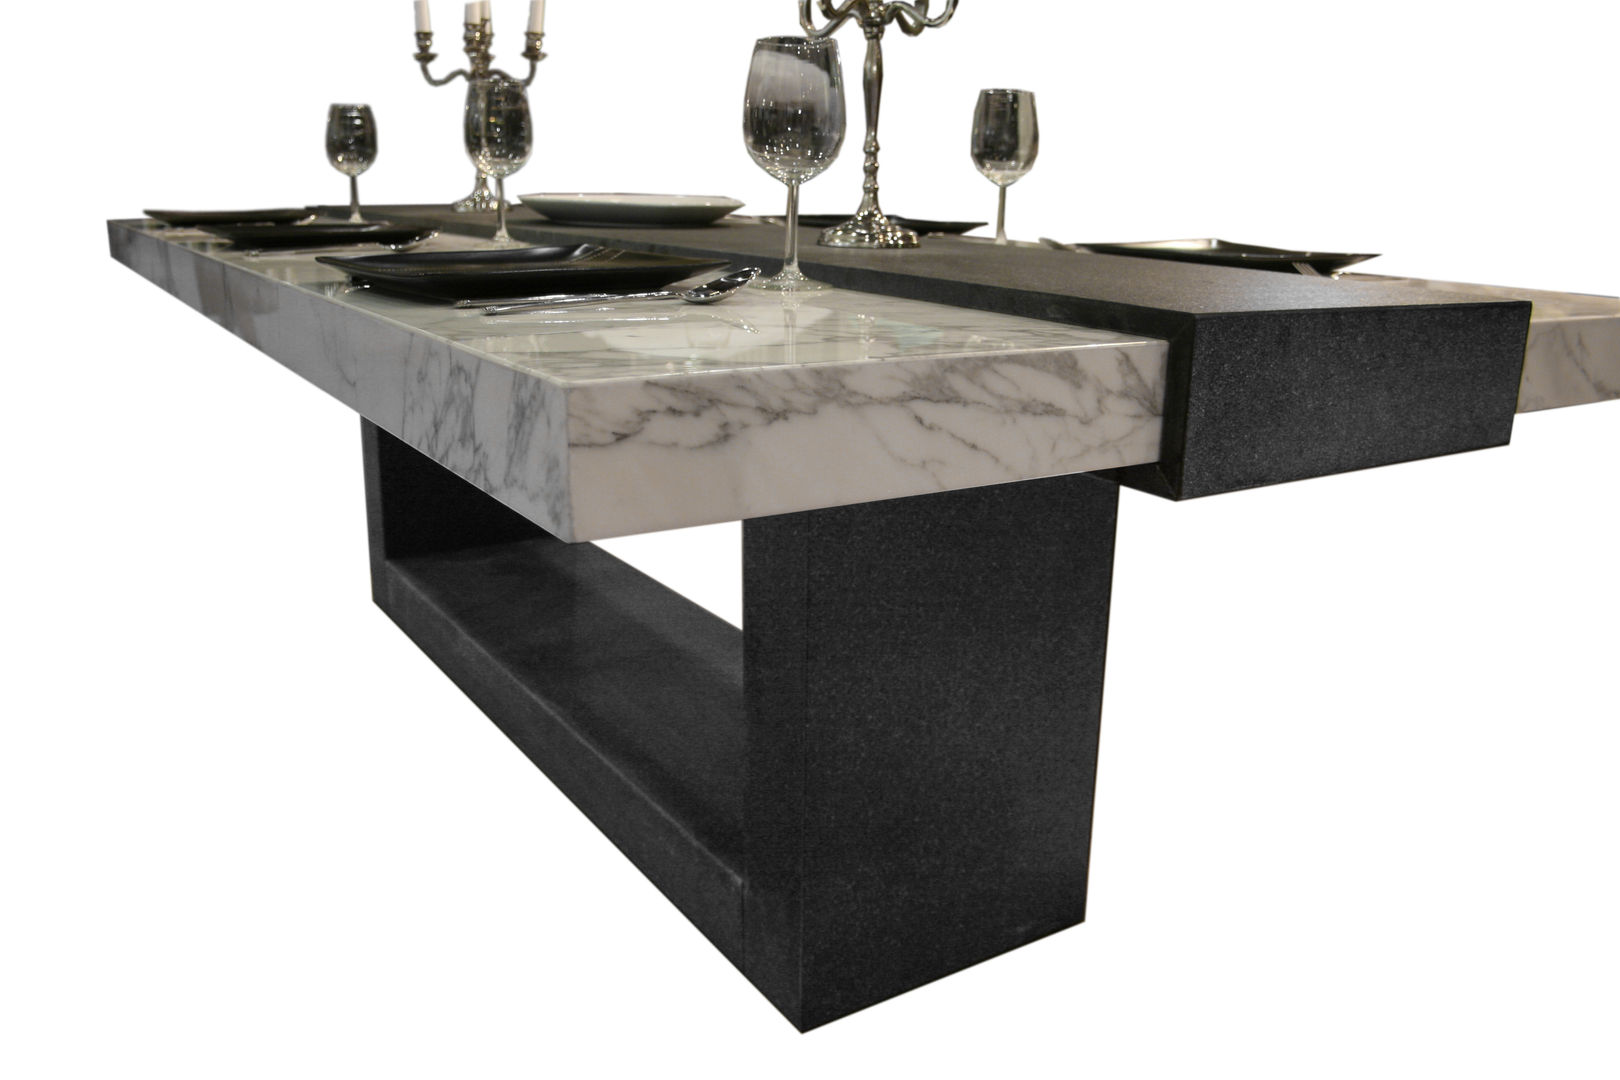 Stone Table Ogle luxury Kitchens & Bathrooms Comedores de estilo moderno Mesas